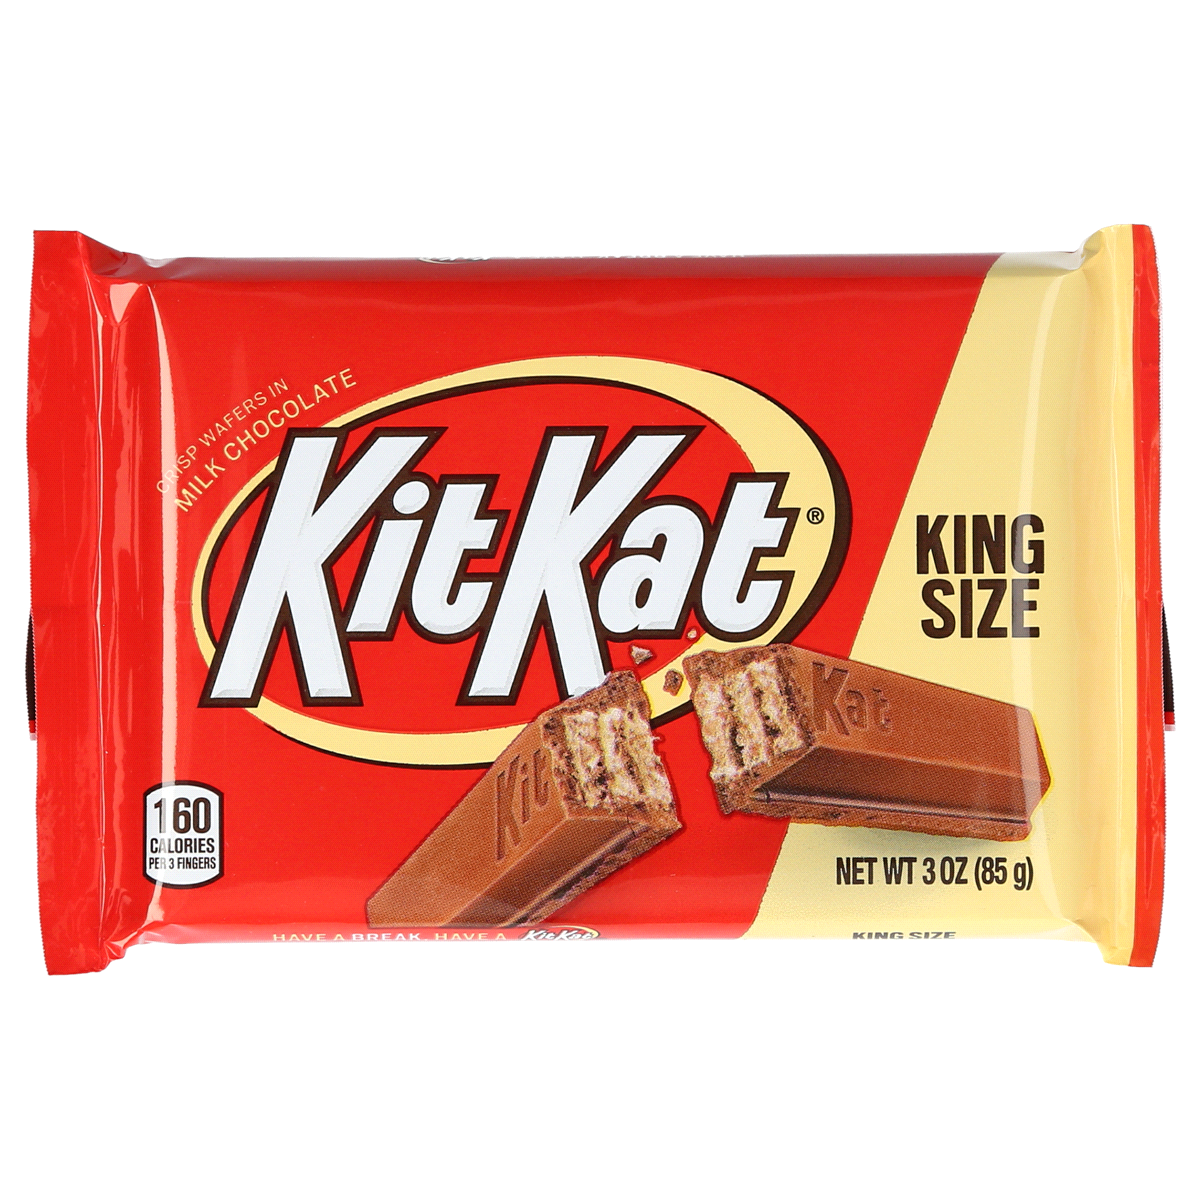 3. Kit Kat 